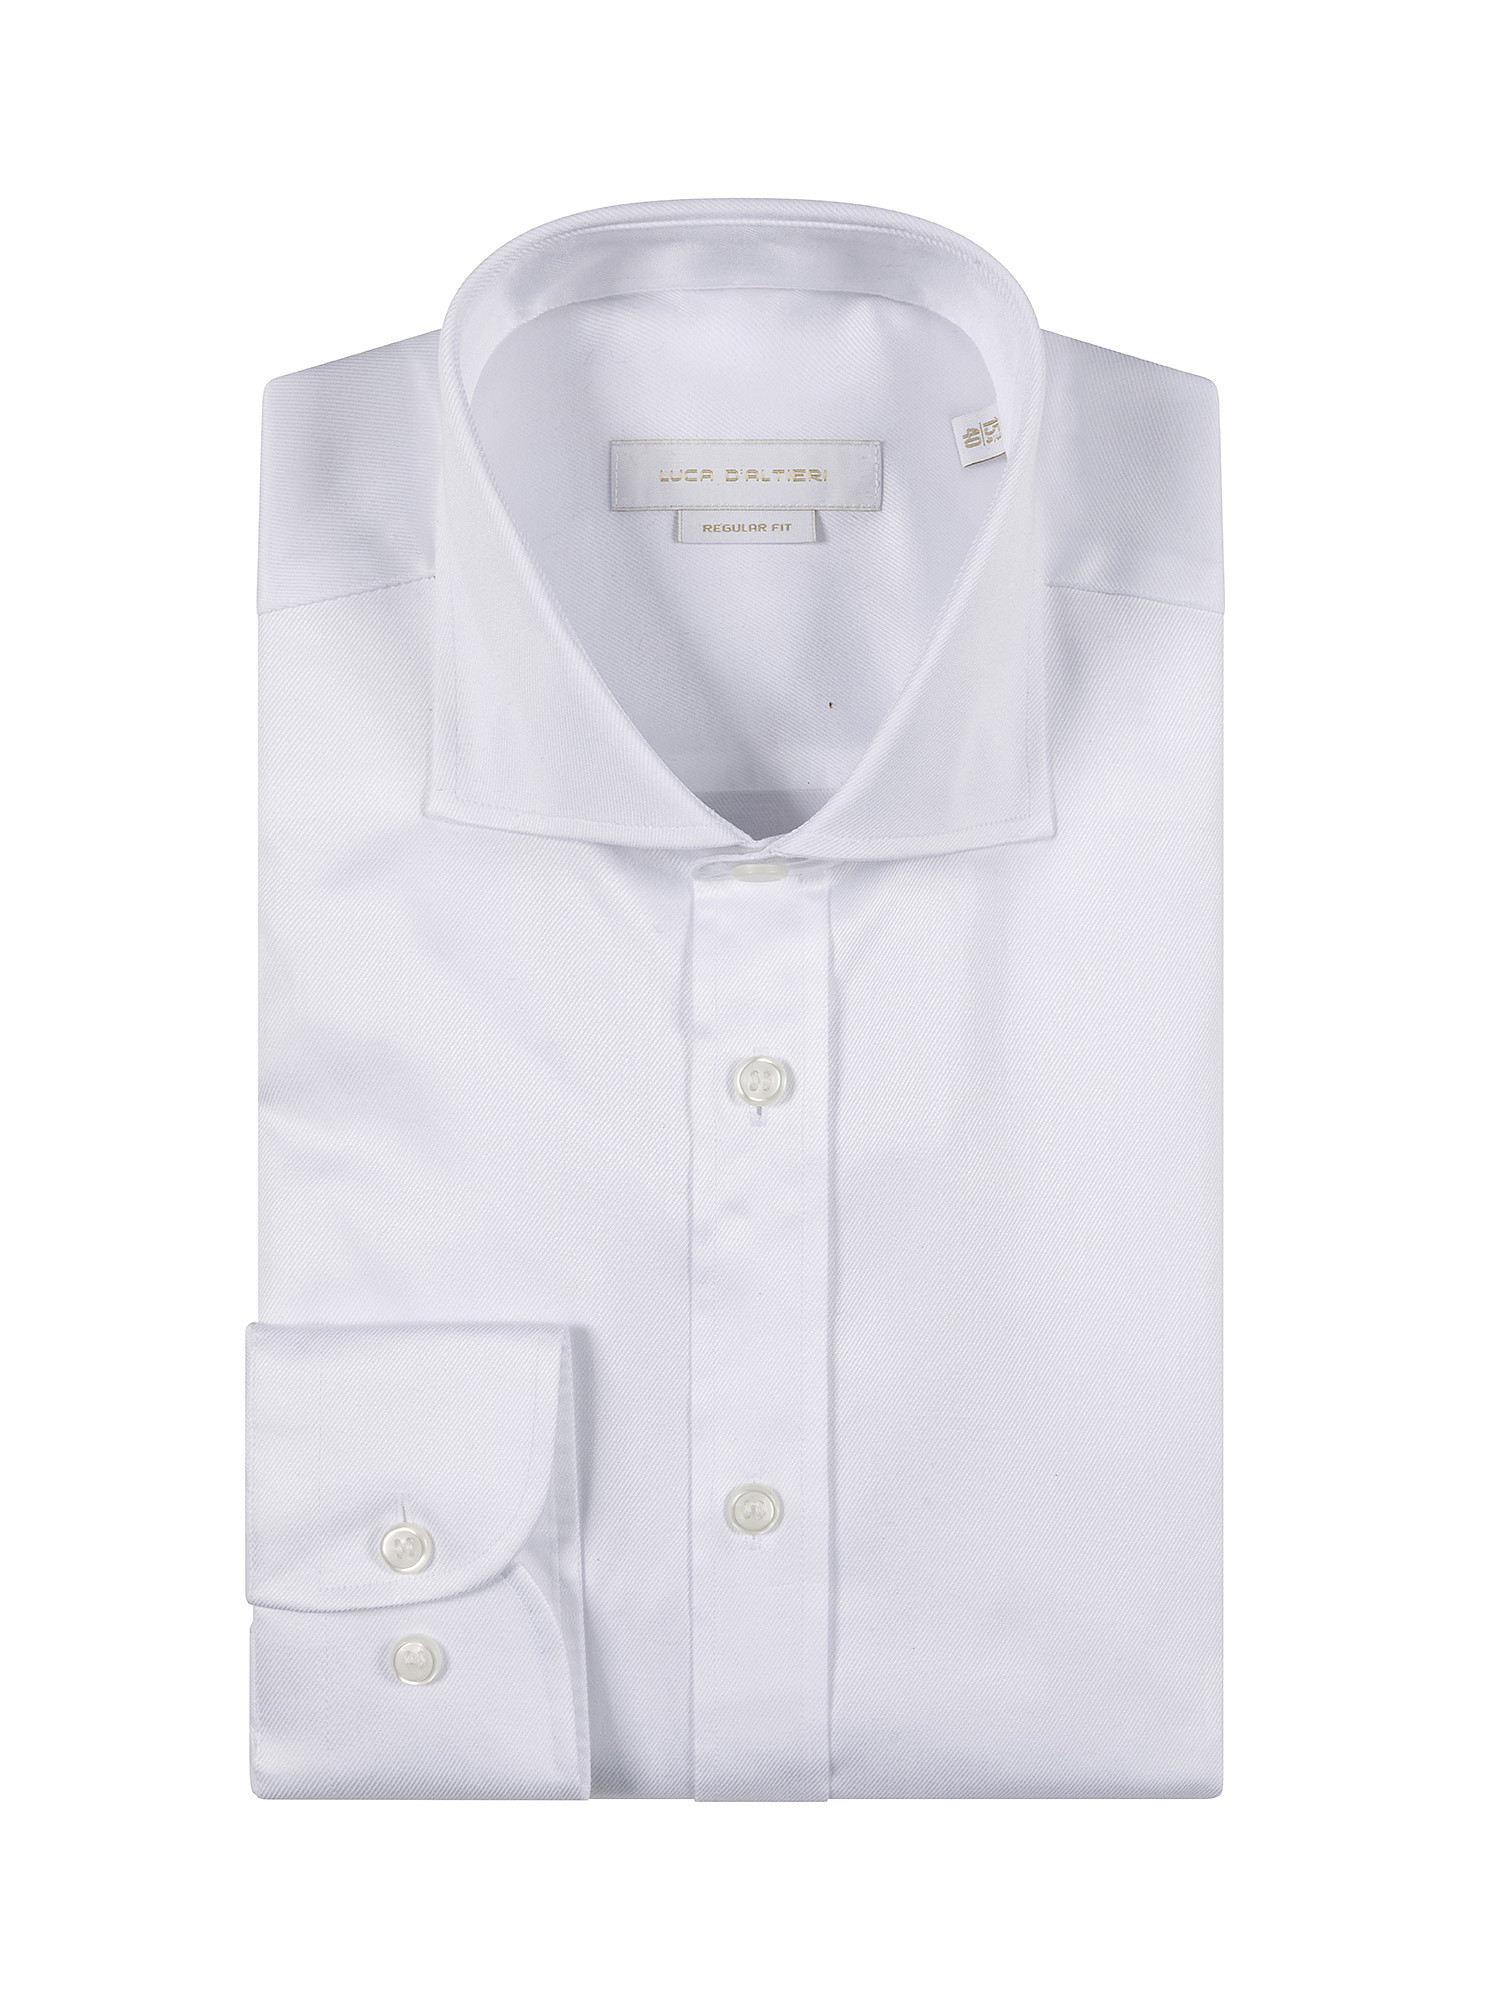 Camicia slim fit twill di cotone, Bianco, large image number 2